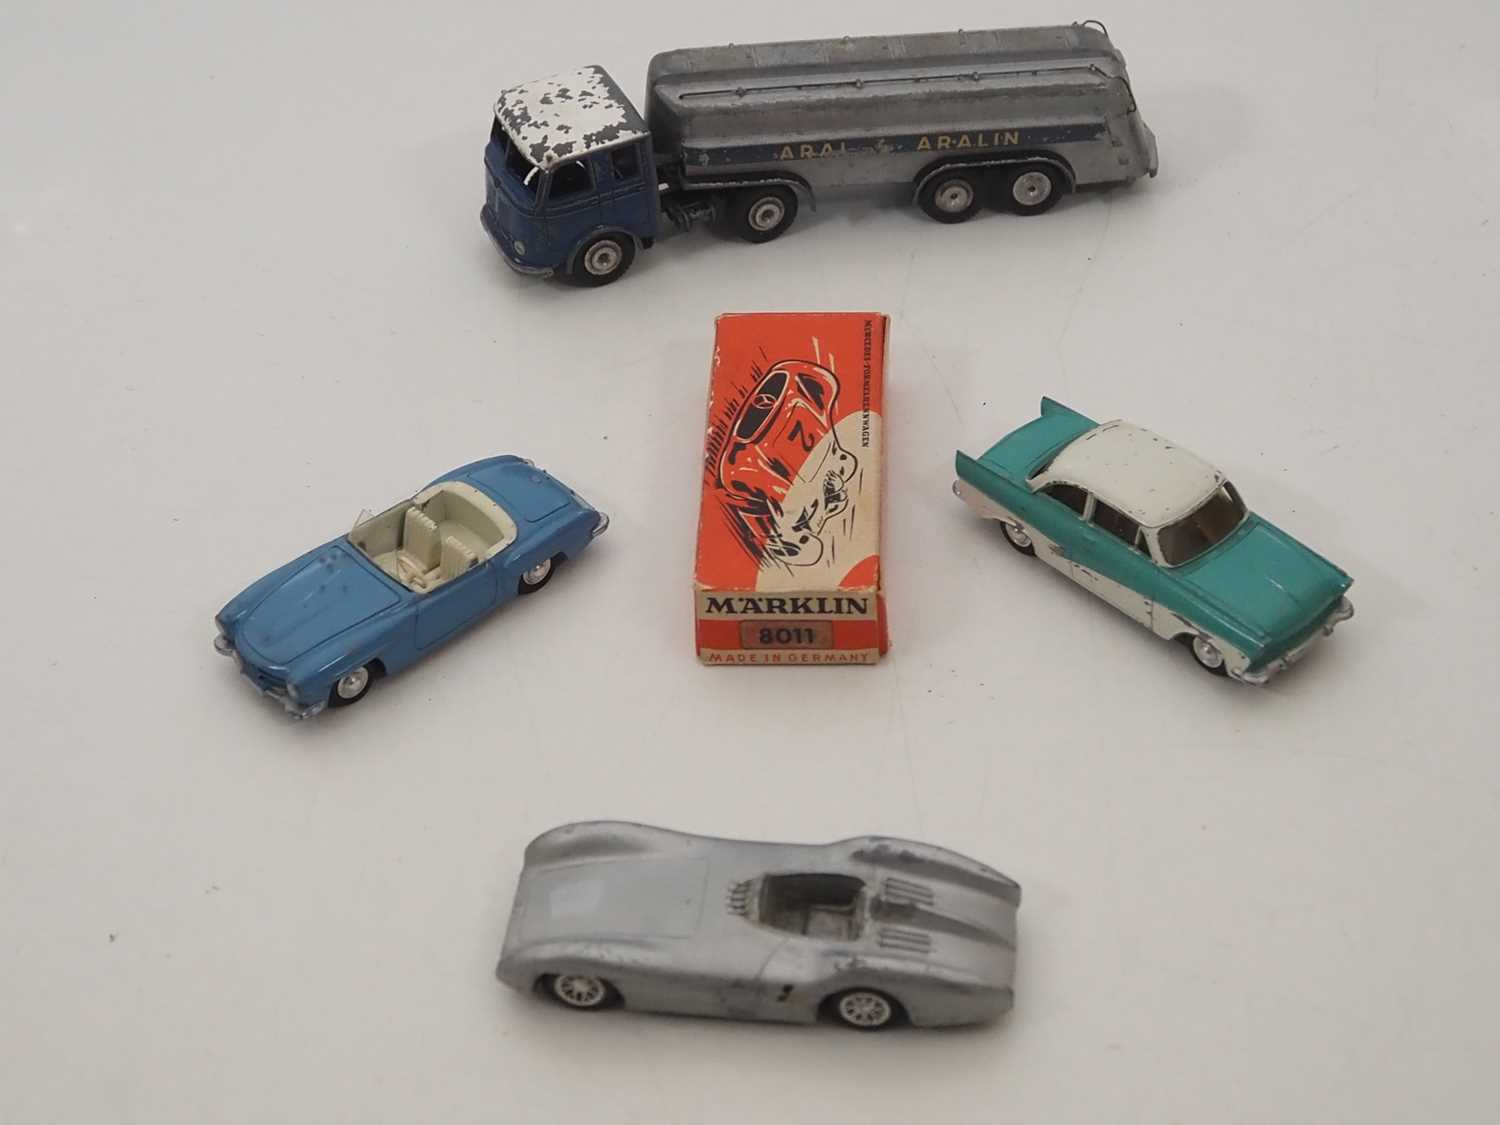 A quantity of vintage MARKLIN diecast vehicles to include a boxed MARKLIN 8011 Mercedes racing car - - Bild 3 aus 3